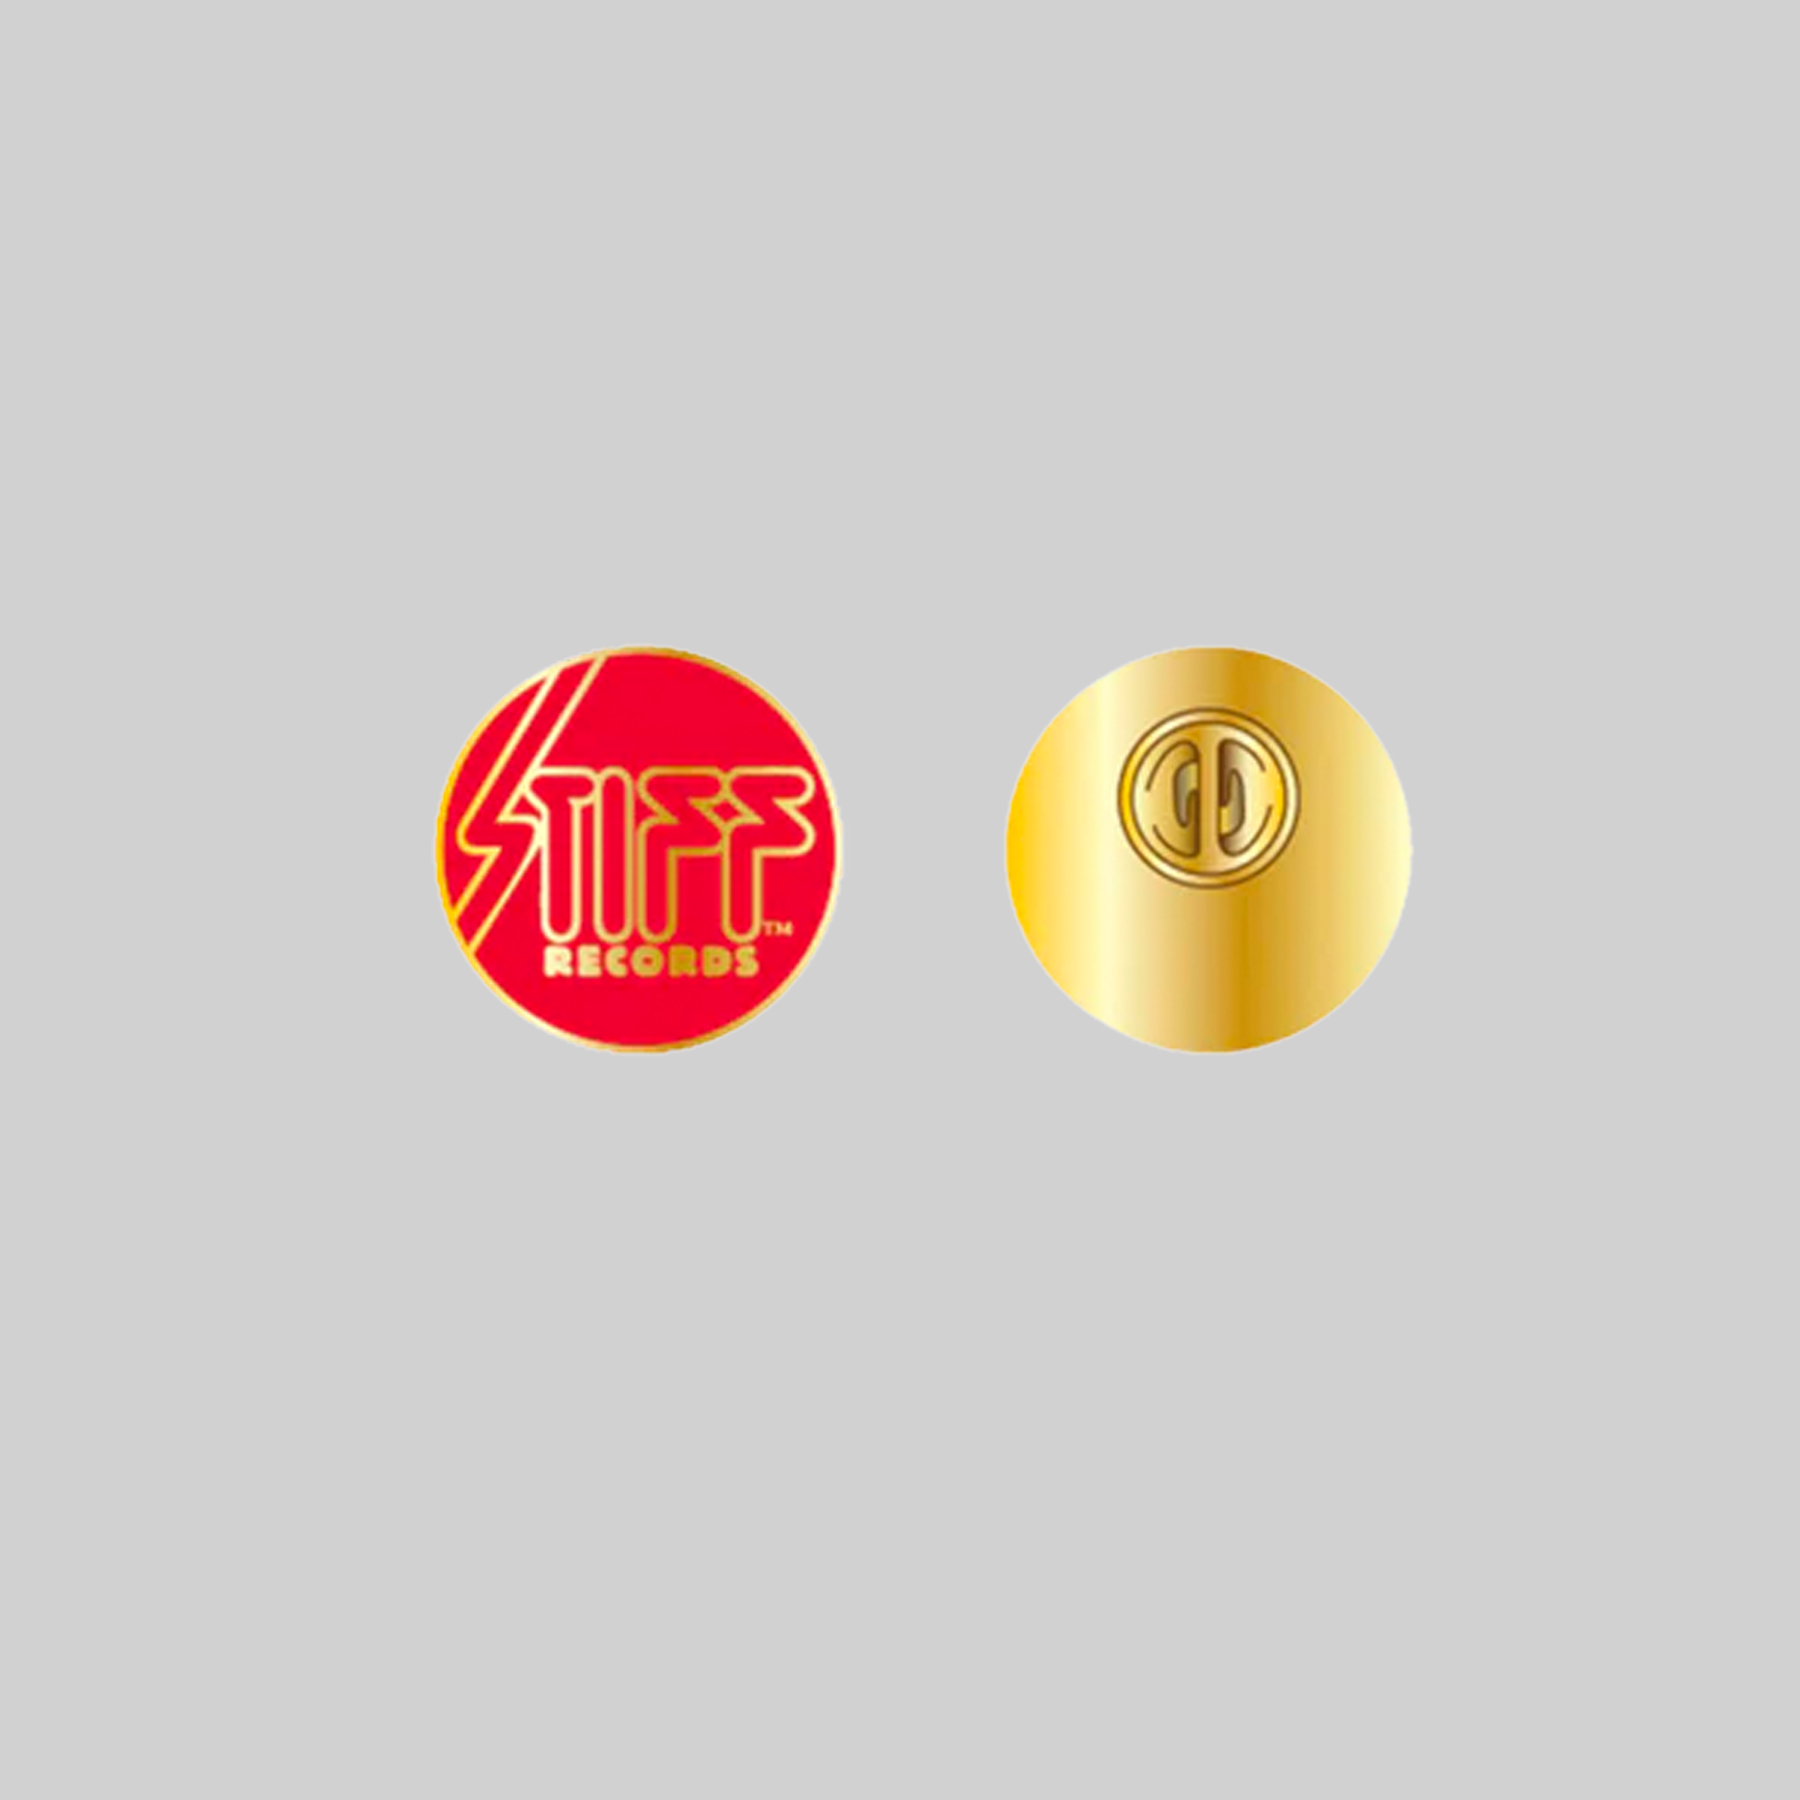 Stiff Records - Red Stiff Logo Pin Badge